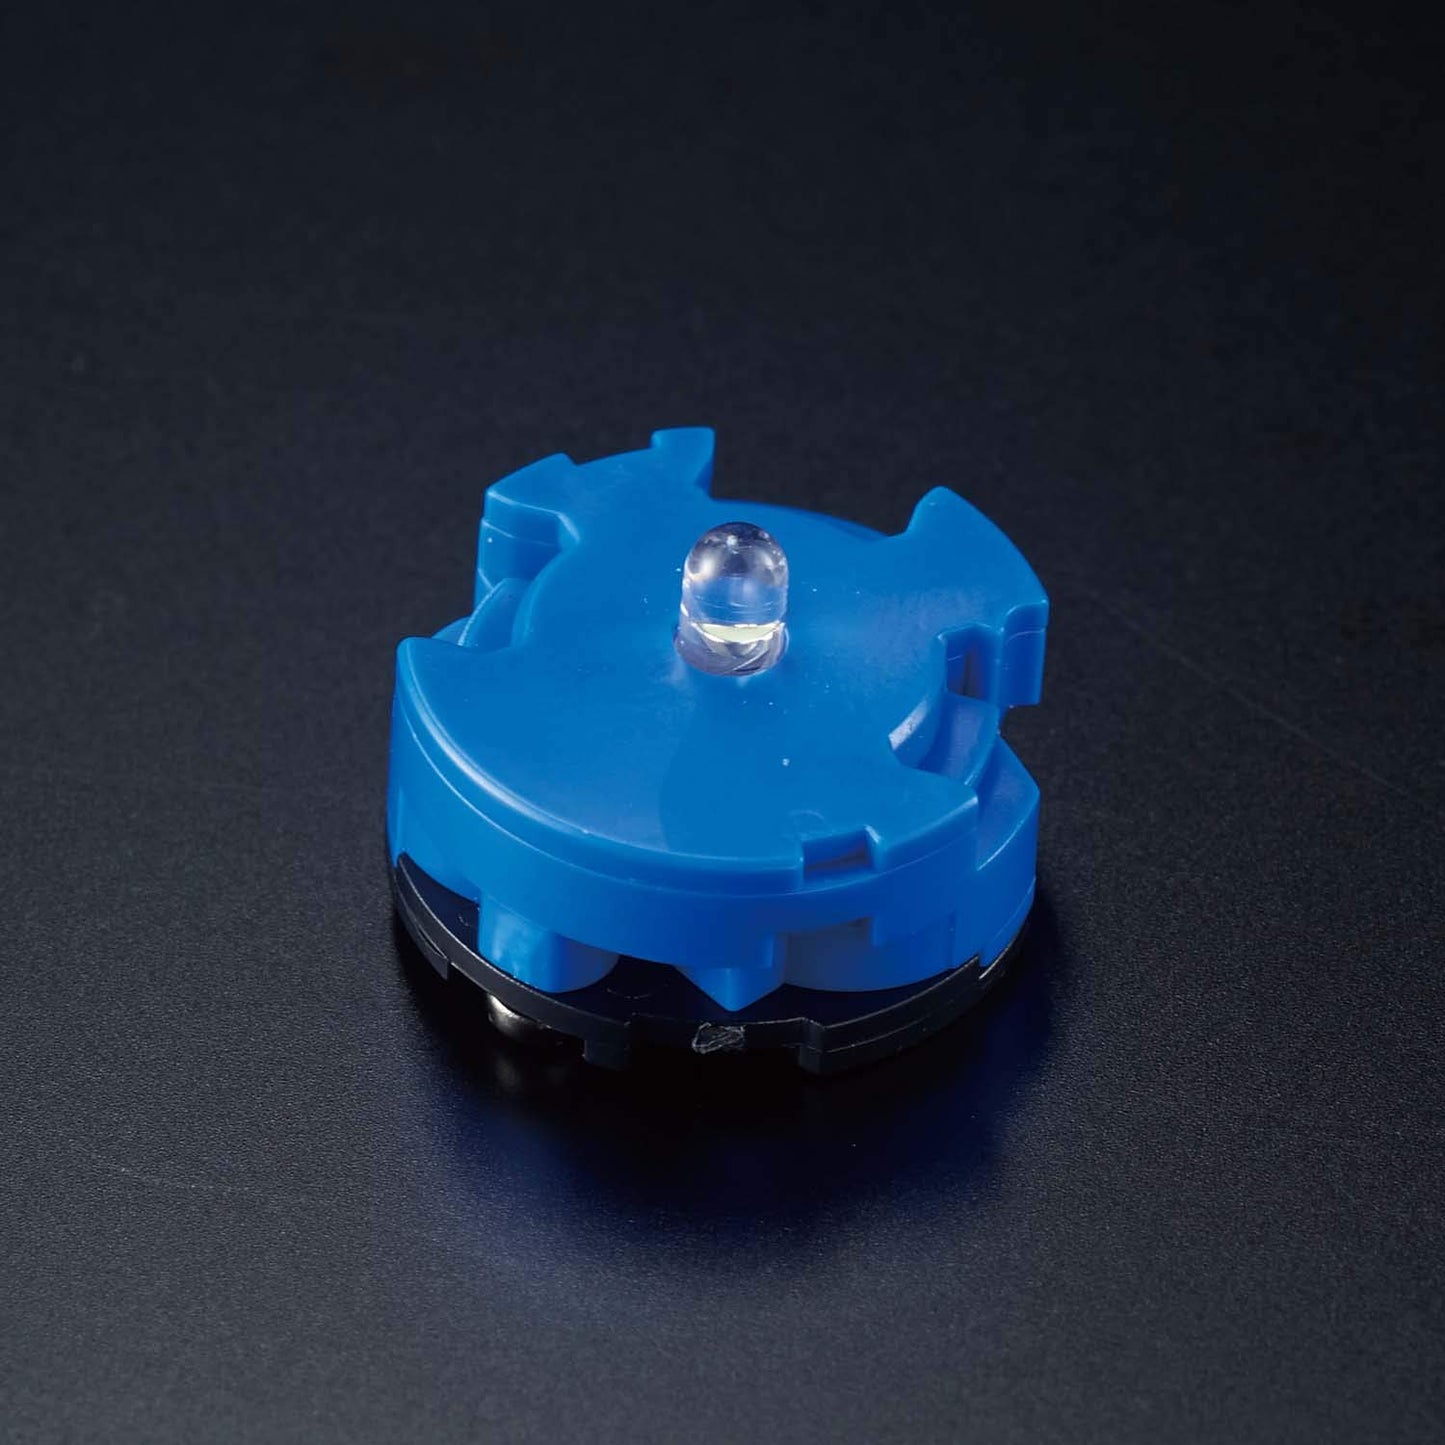 Gunpla LED Unit - Blue (1 Piece)